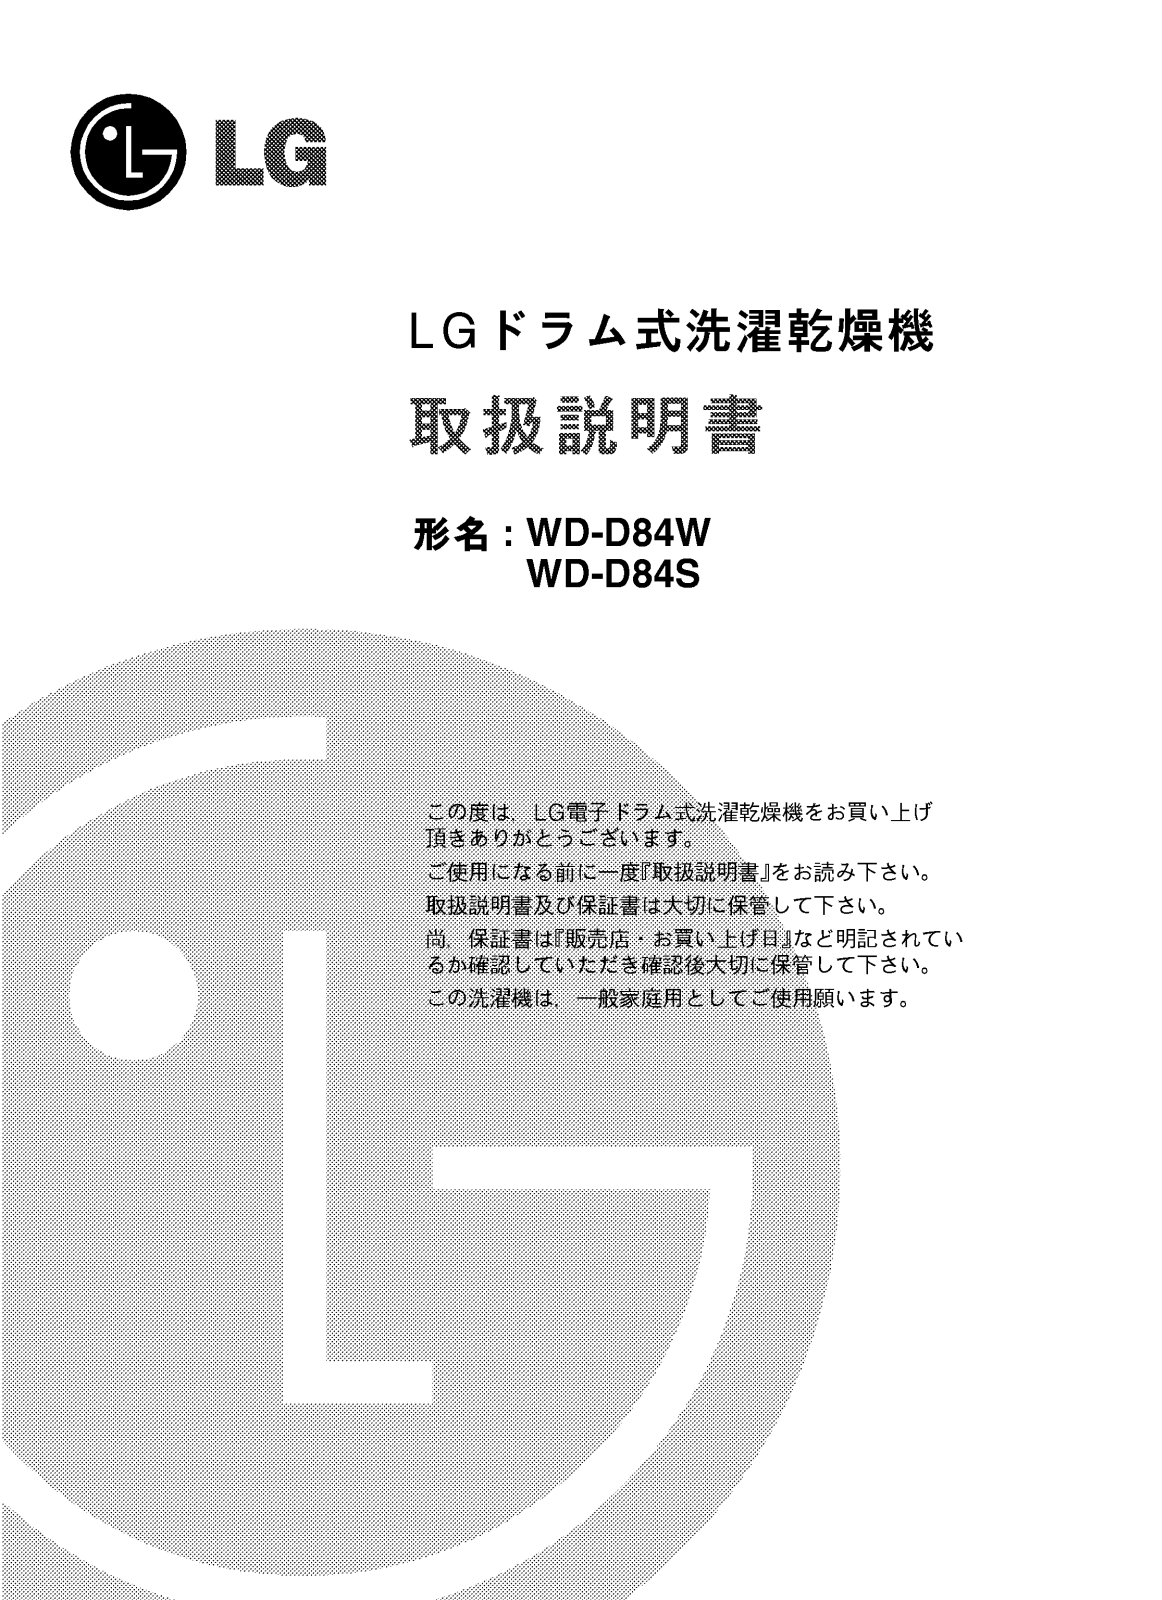 LG WD-1476RD instruction manual